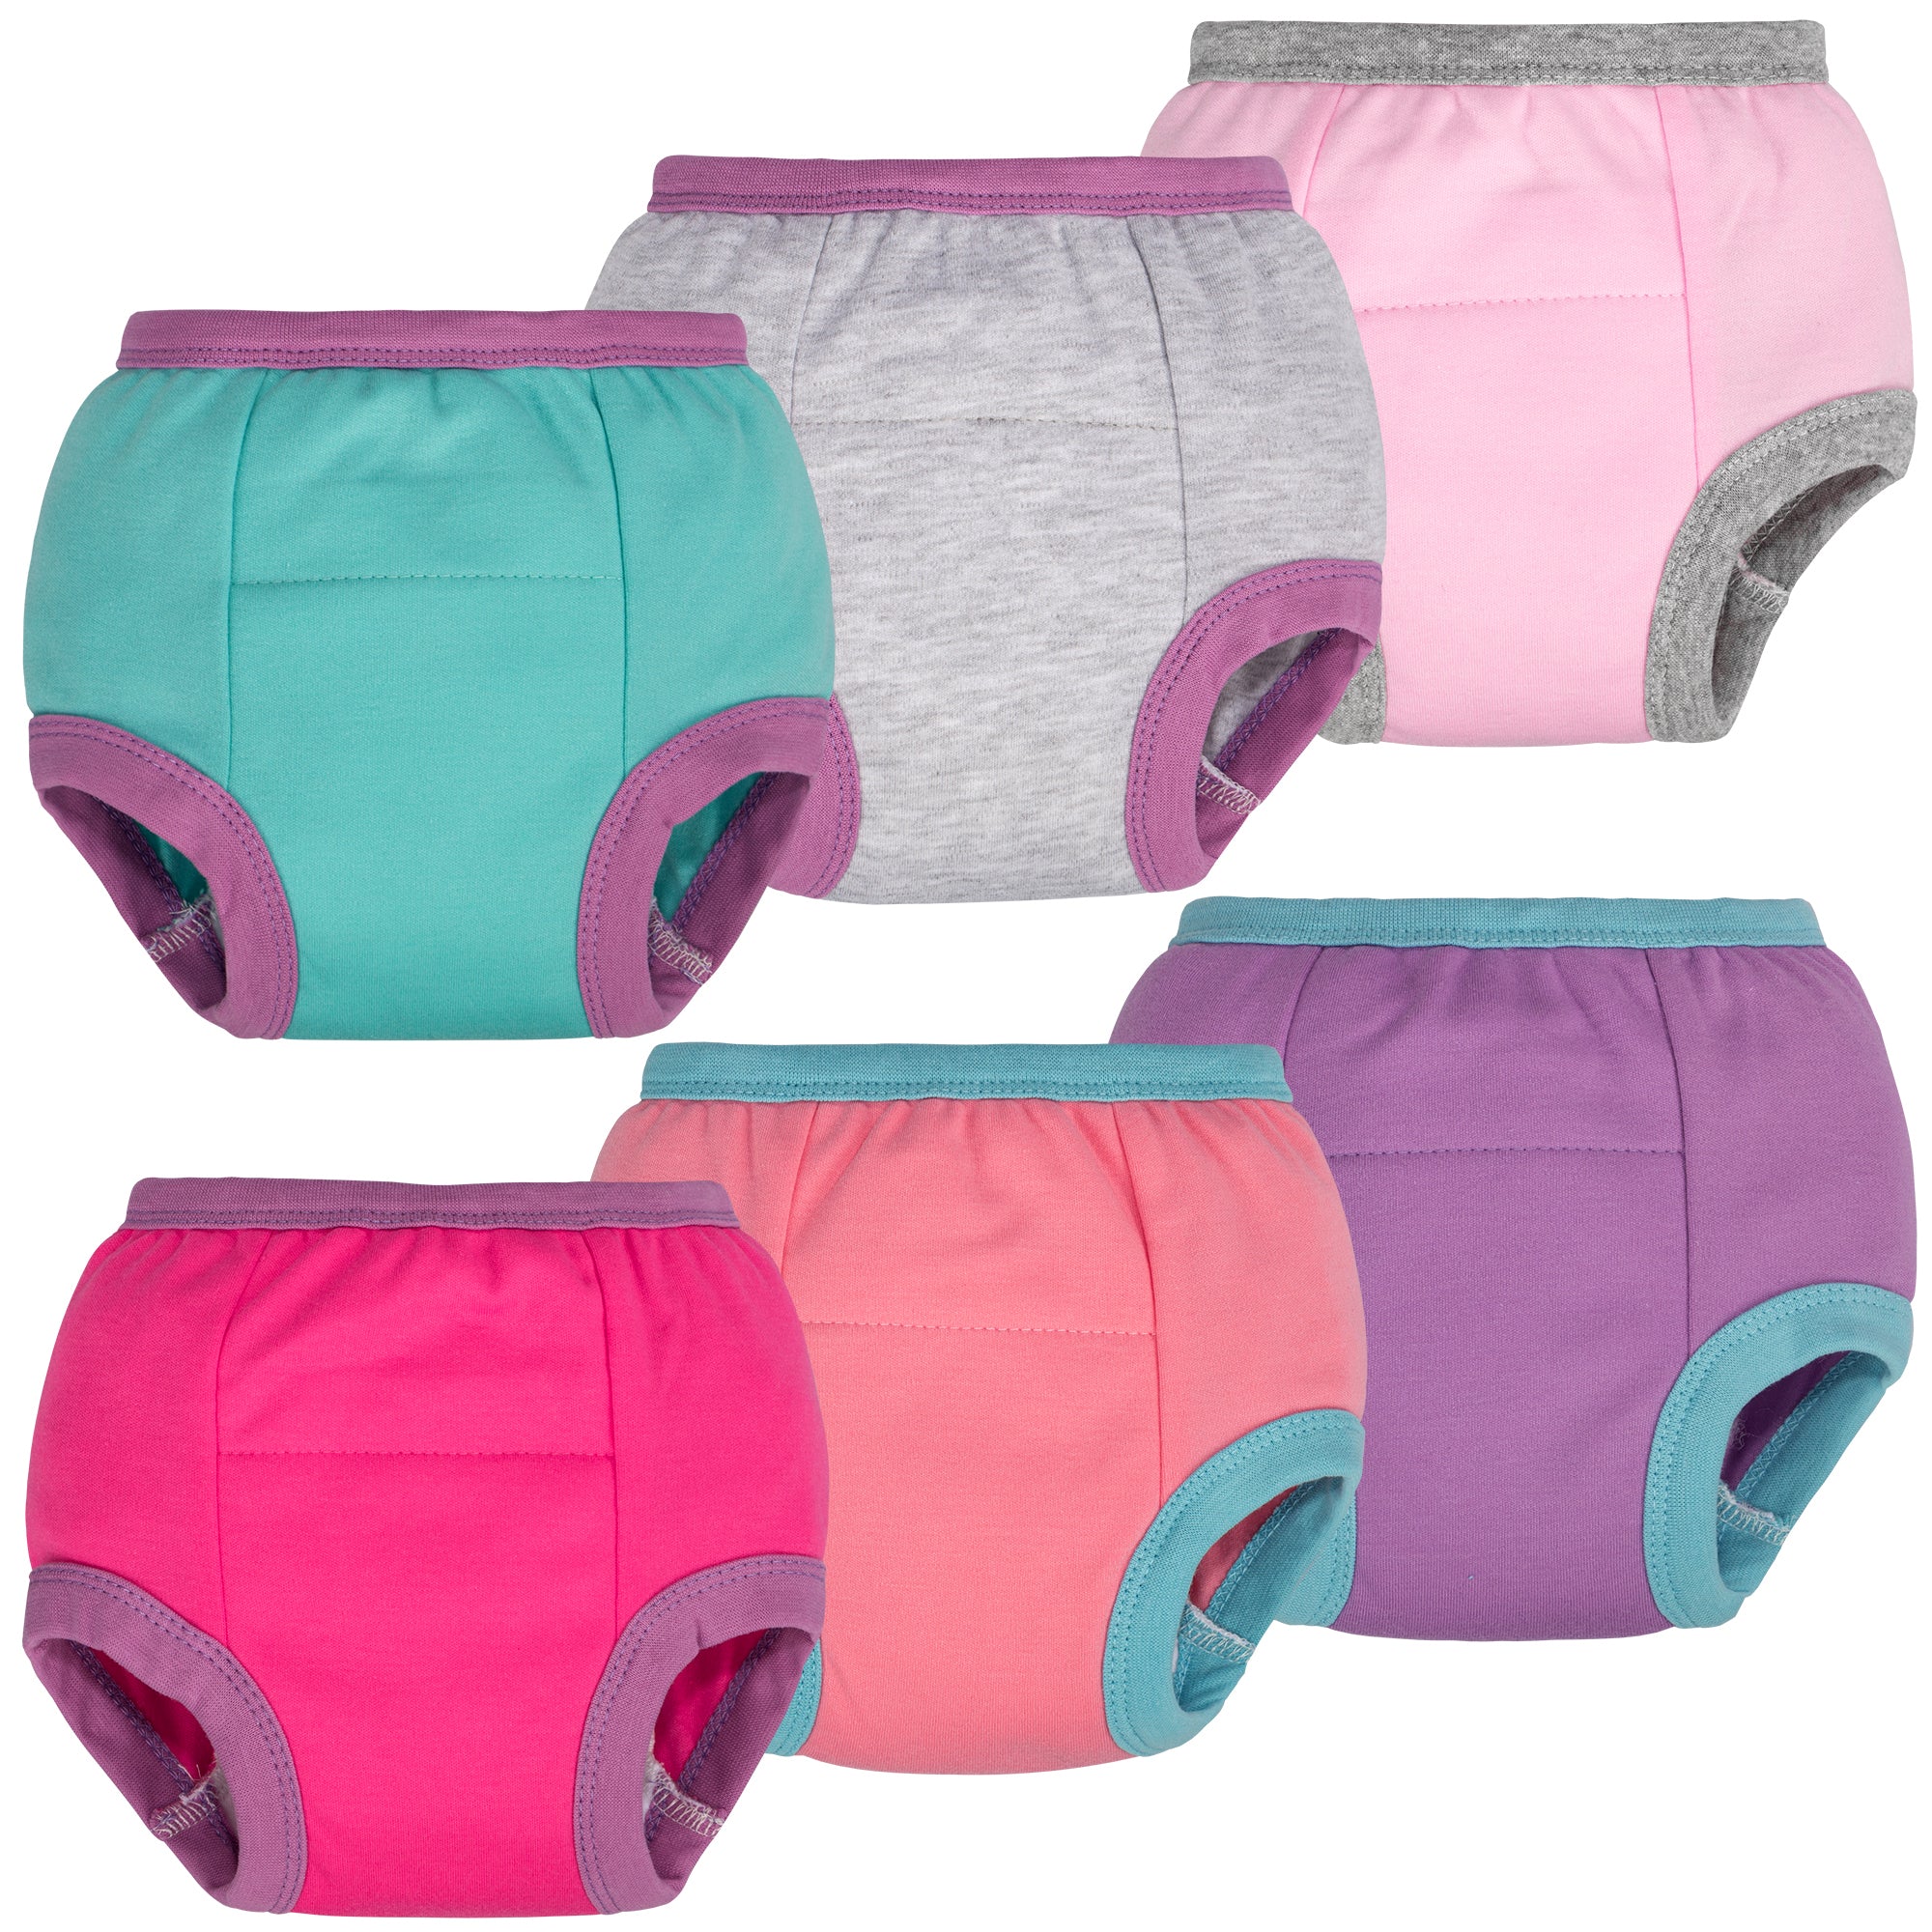 BIG ELEPHANT Baby Potty Training Pants Underwear for Girl's - 100